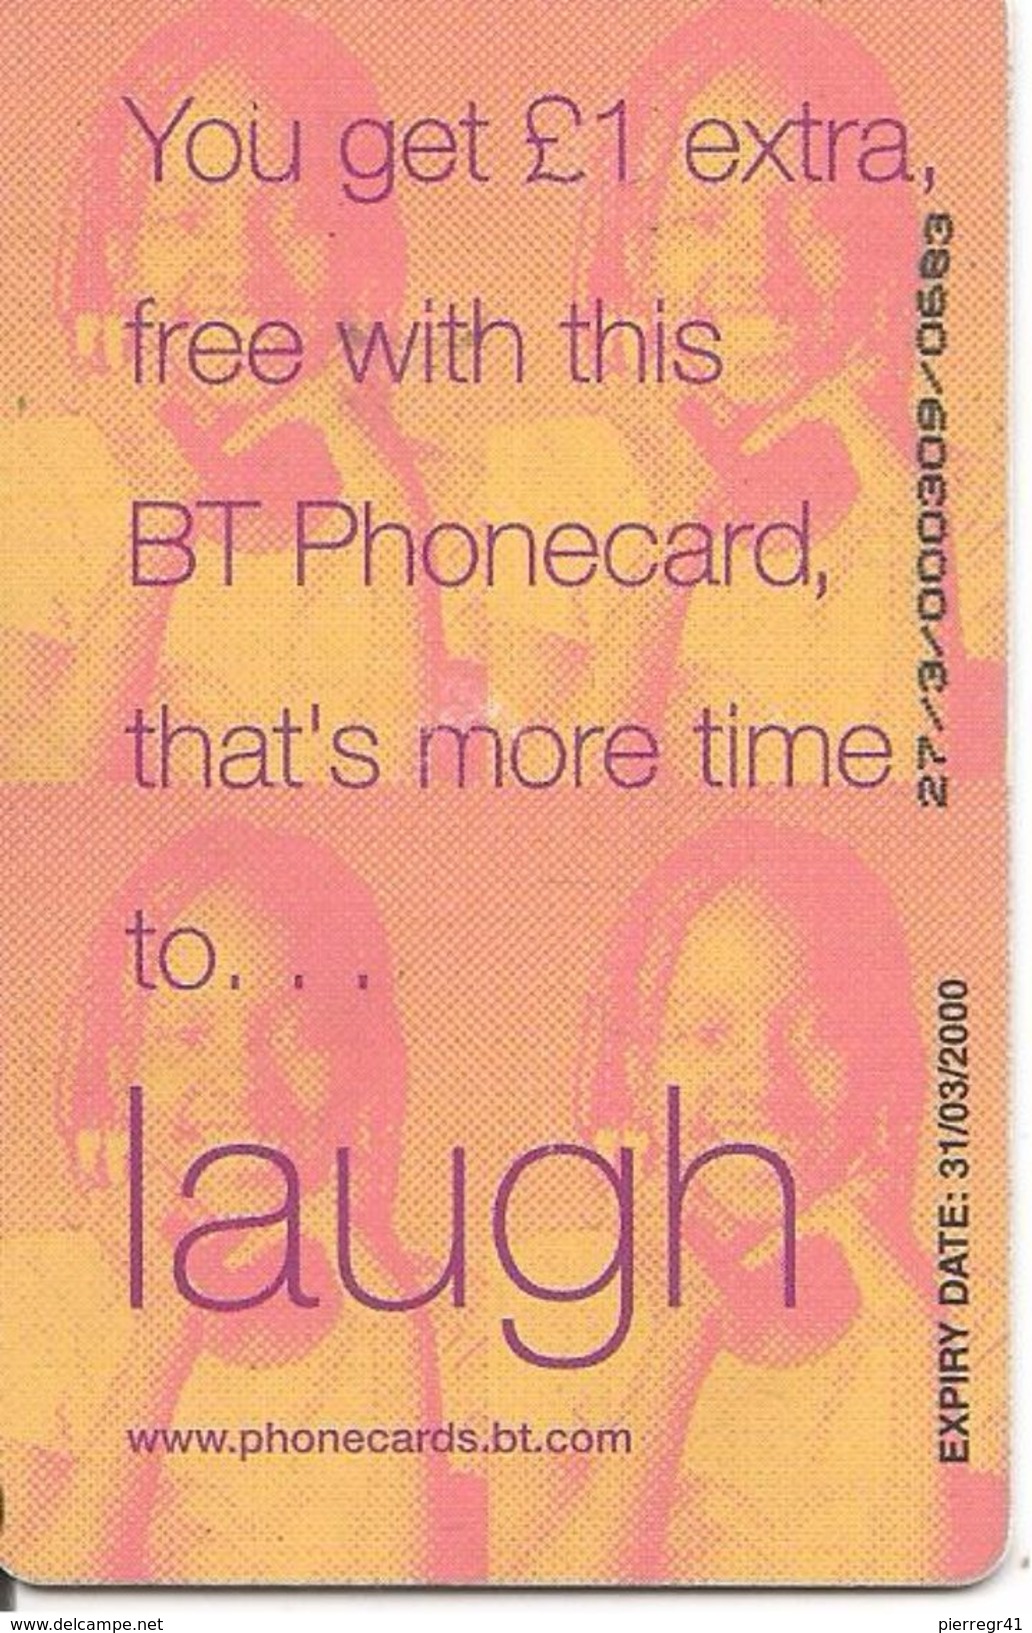 CARTE-PUCE-BT-5£-03/00-PH ONECARD-LAUGH-ENFANT  -TBE - BT Phonecard Plus